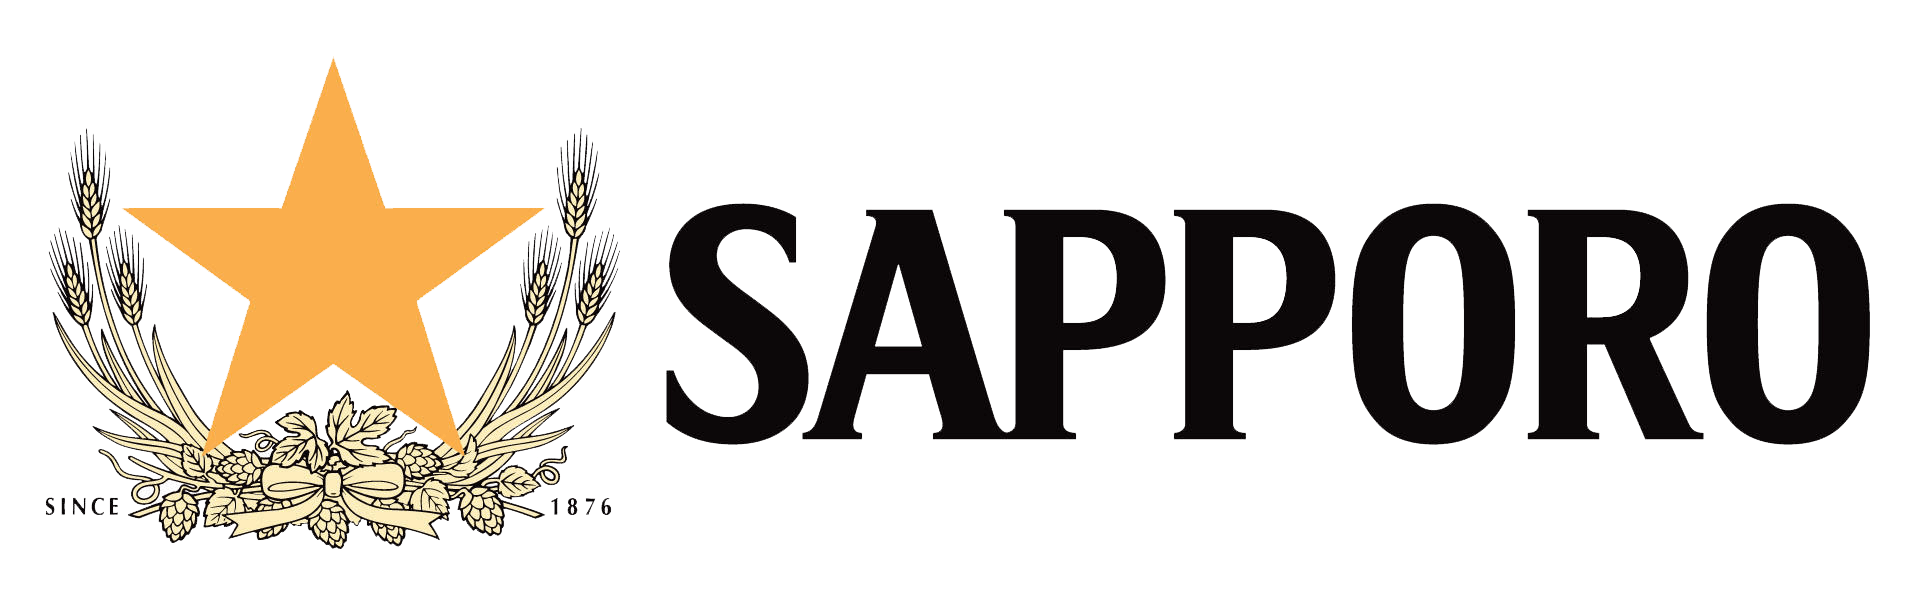 Sapporo Logo - sapporo-logo - DBI Beverage